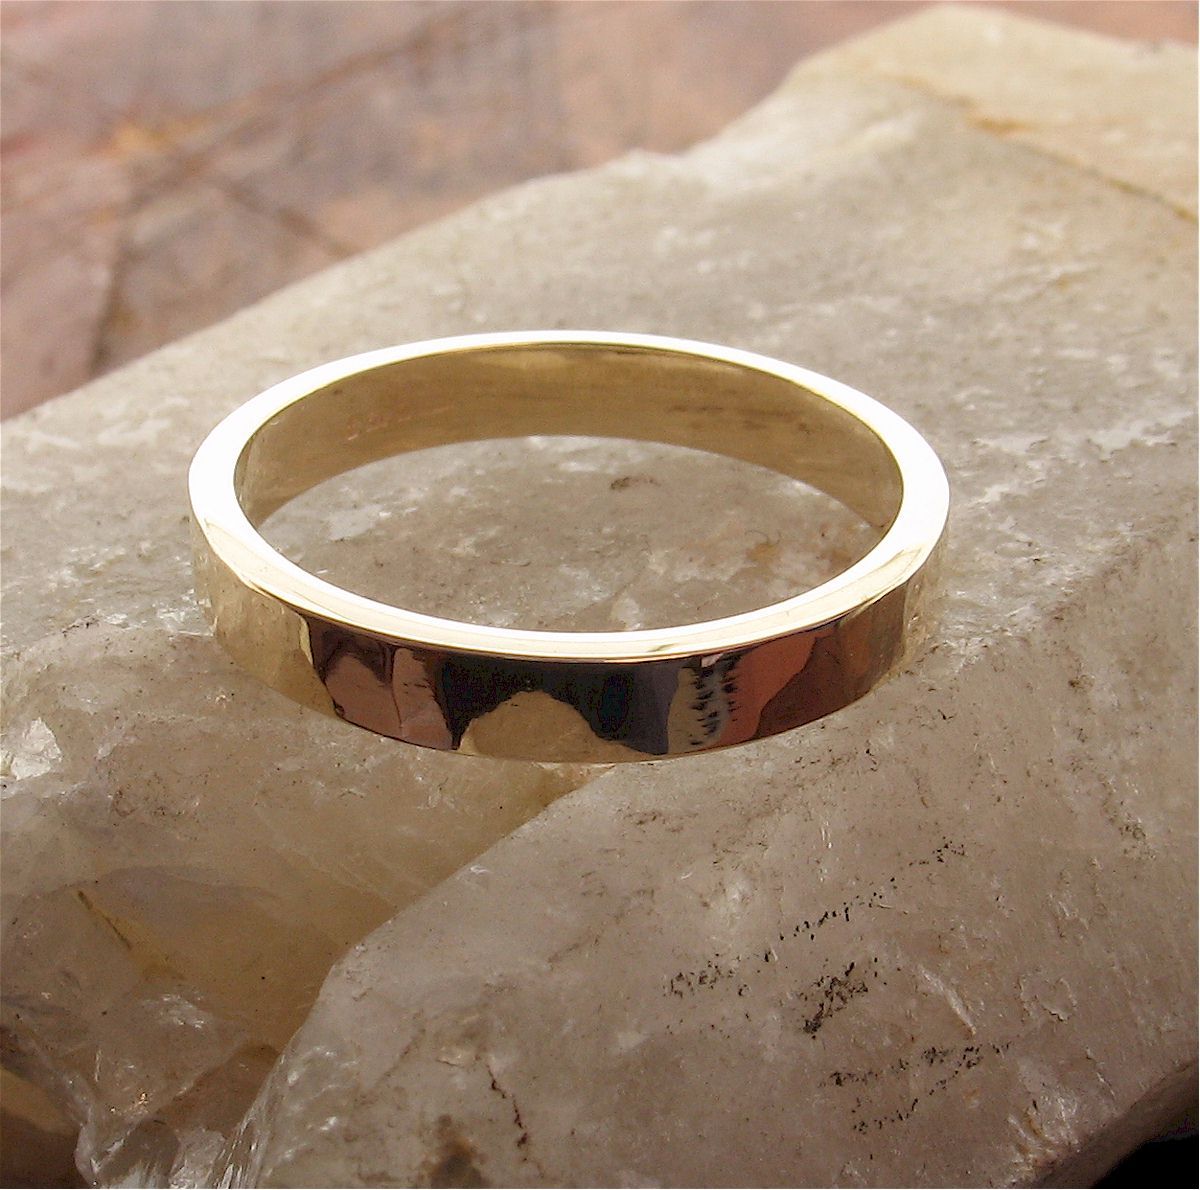 Gold thin wedding ring, Water Ripples design - Cumbrian Designs